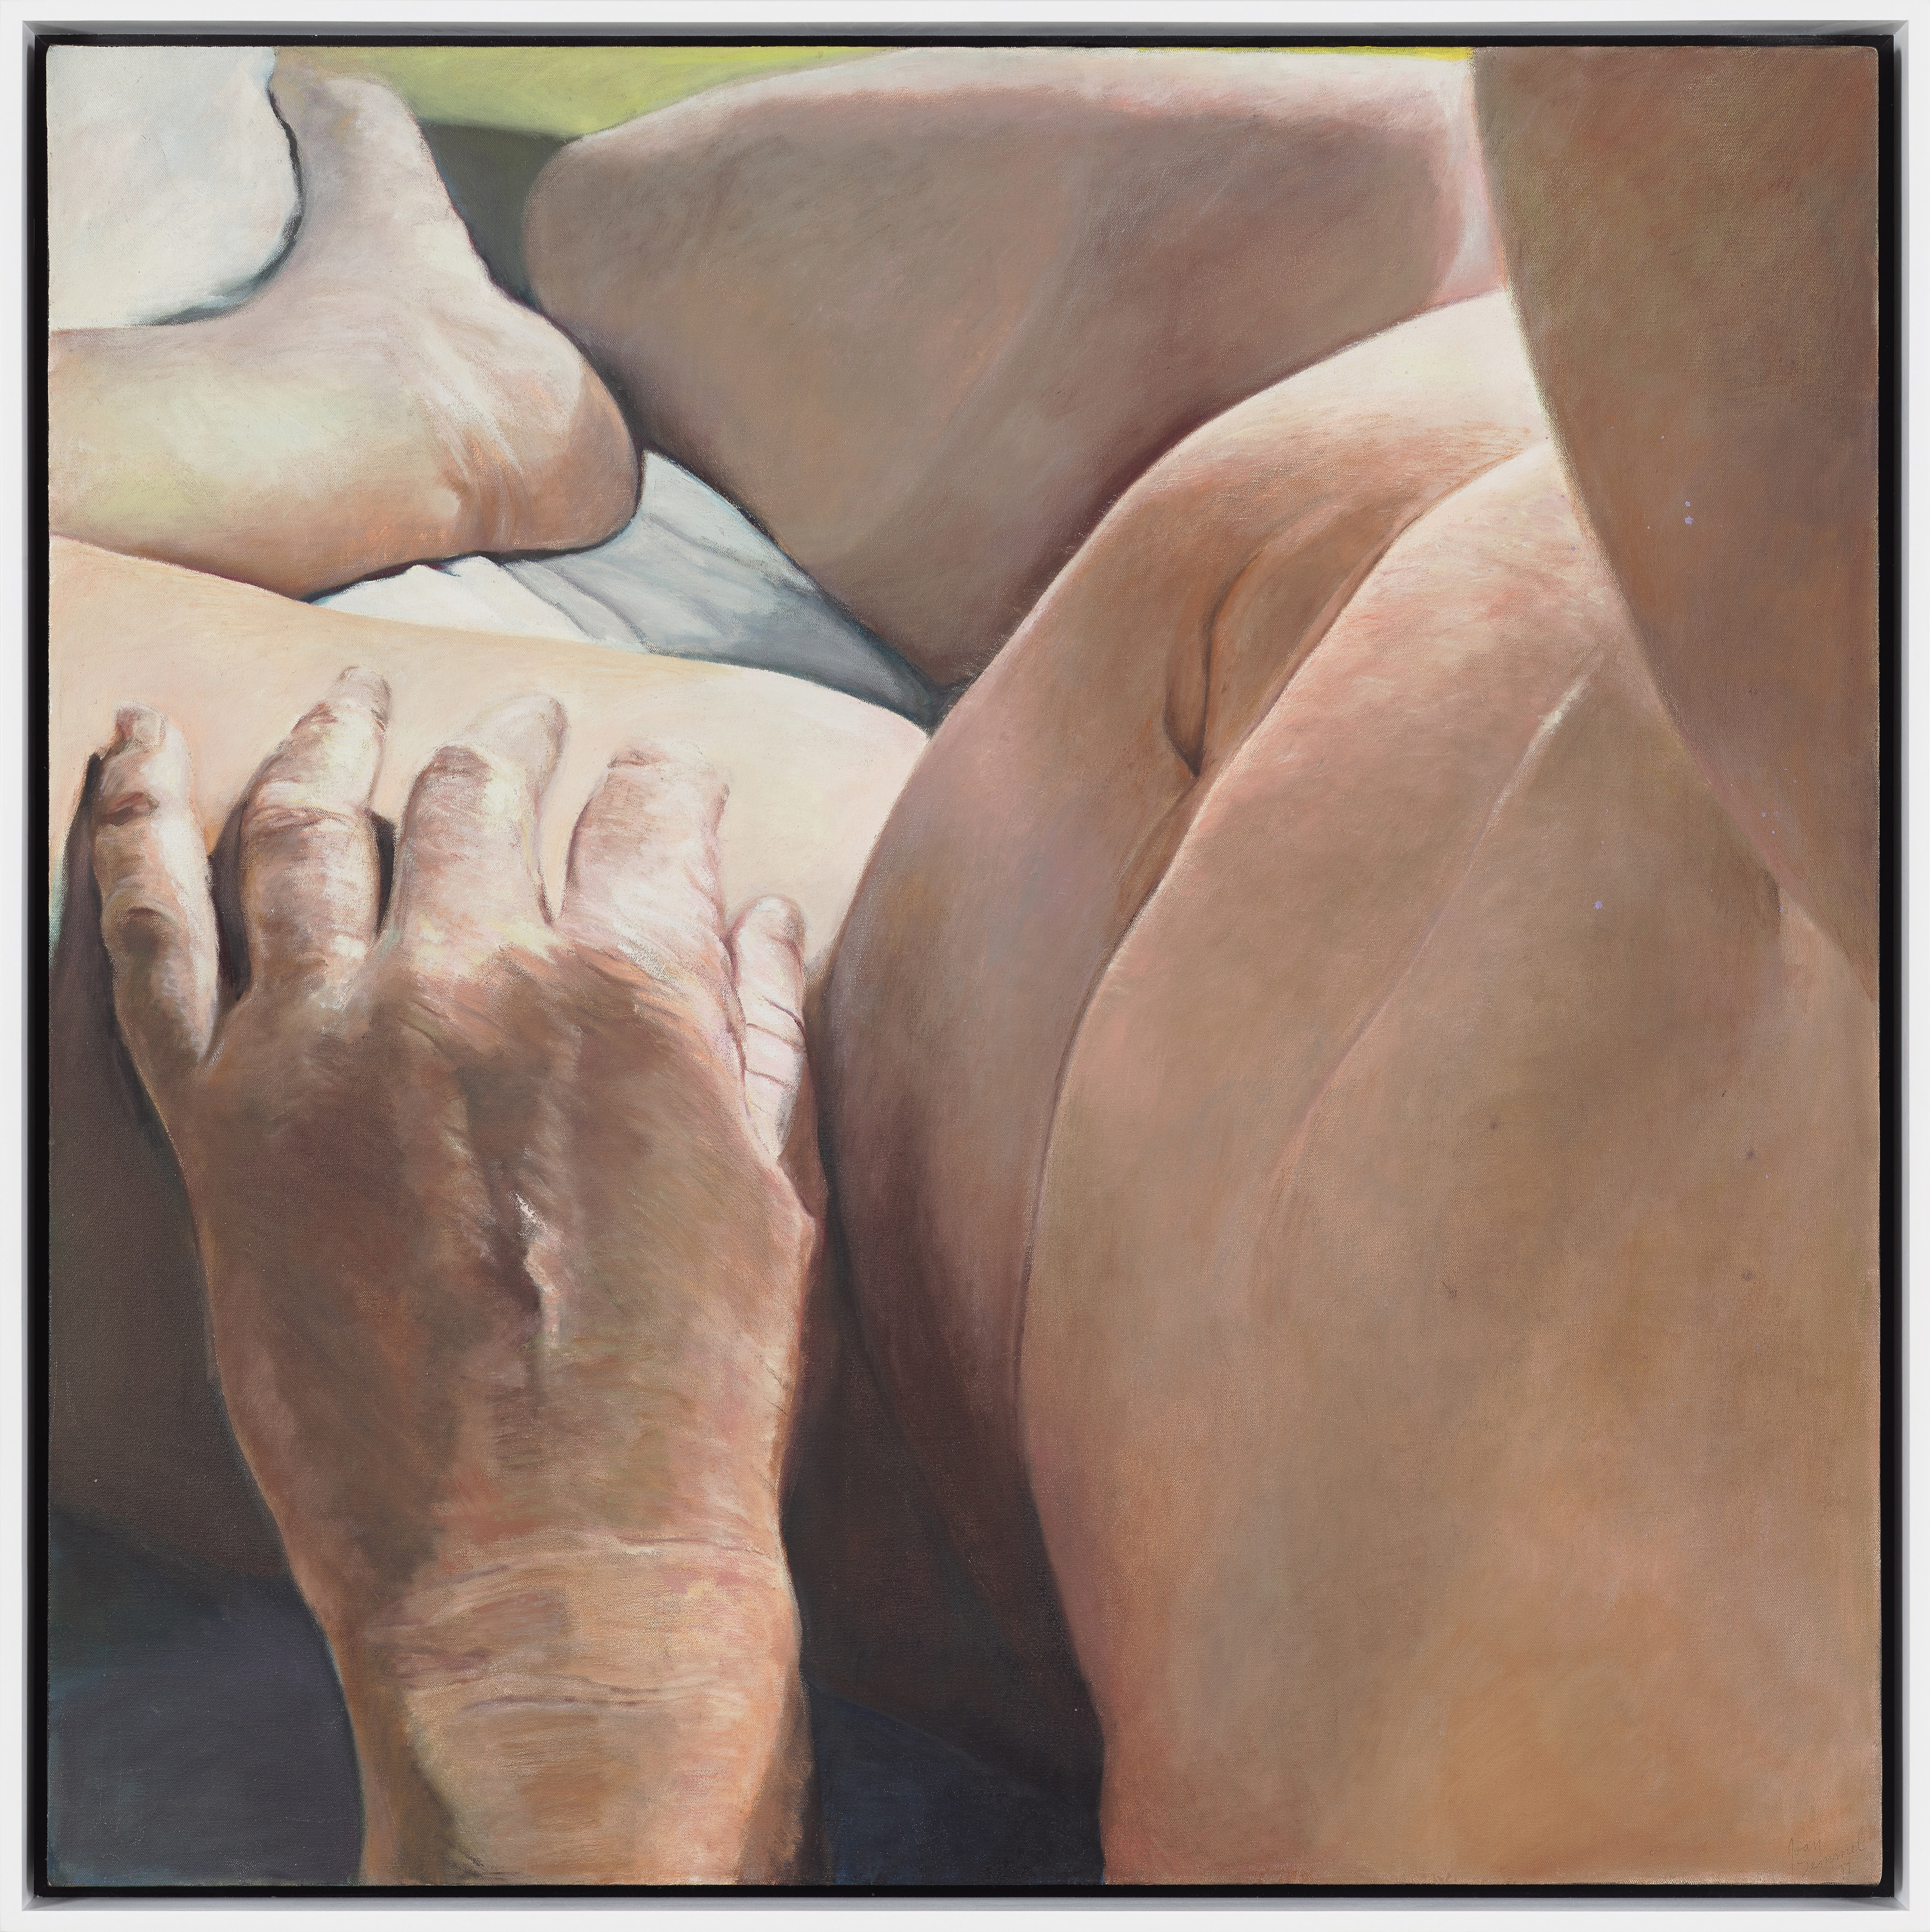 Joan Semmel, Foreground Hand, 1977